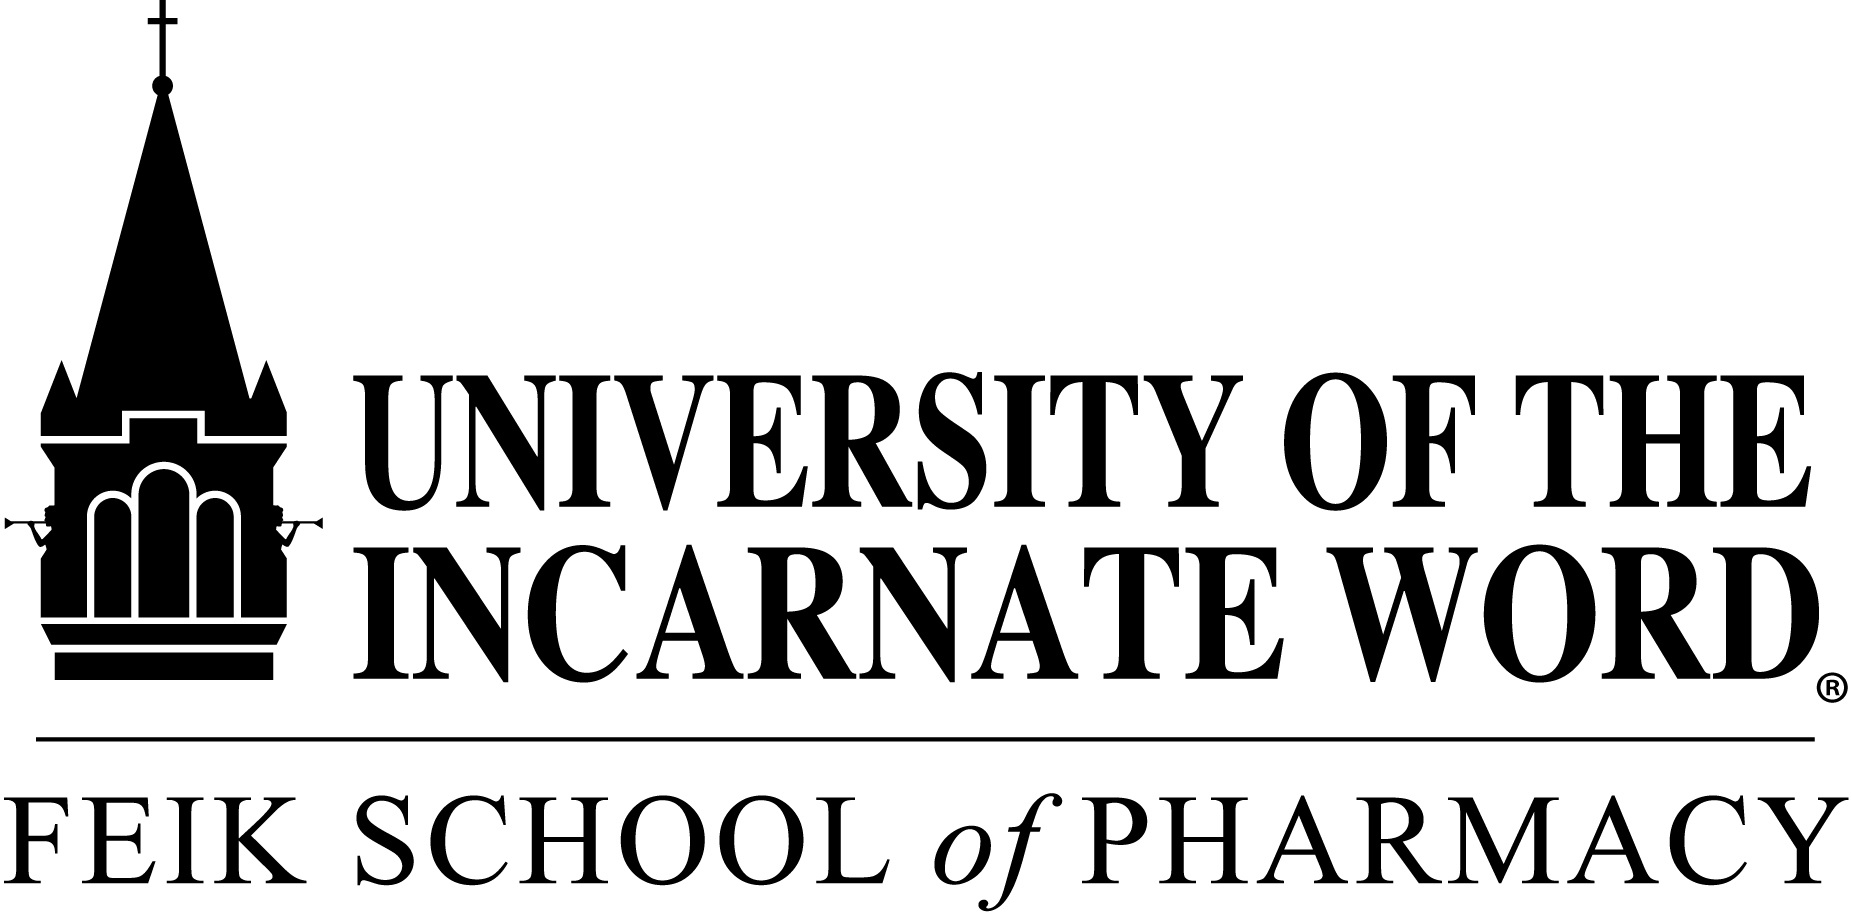 University of the Incarnate Word- Feik School of Pharmacy